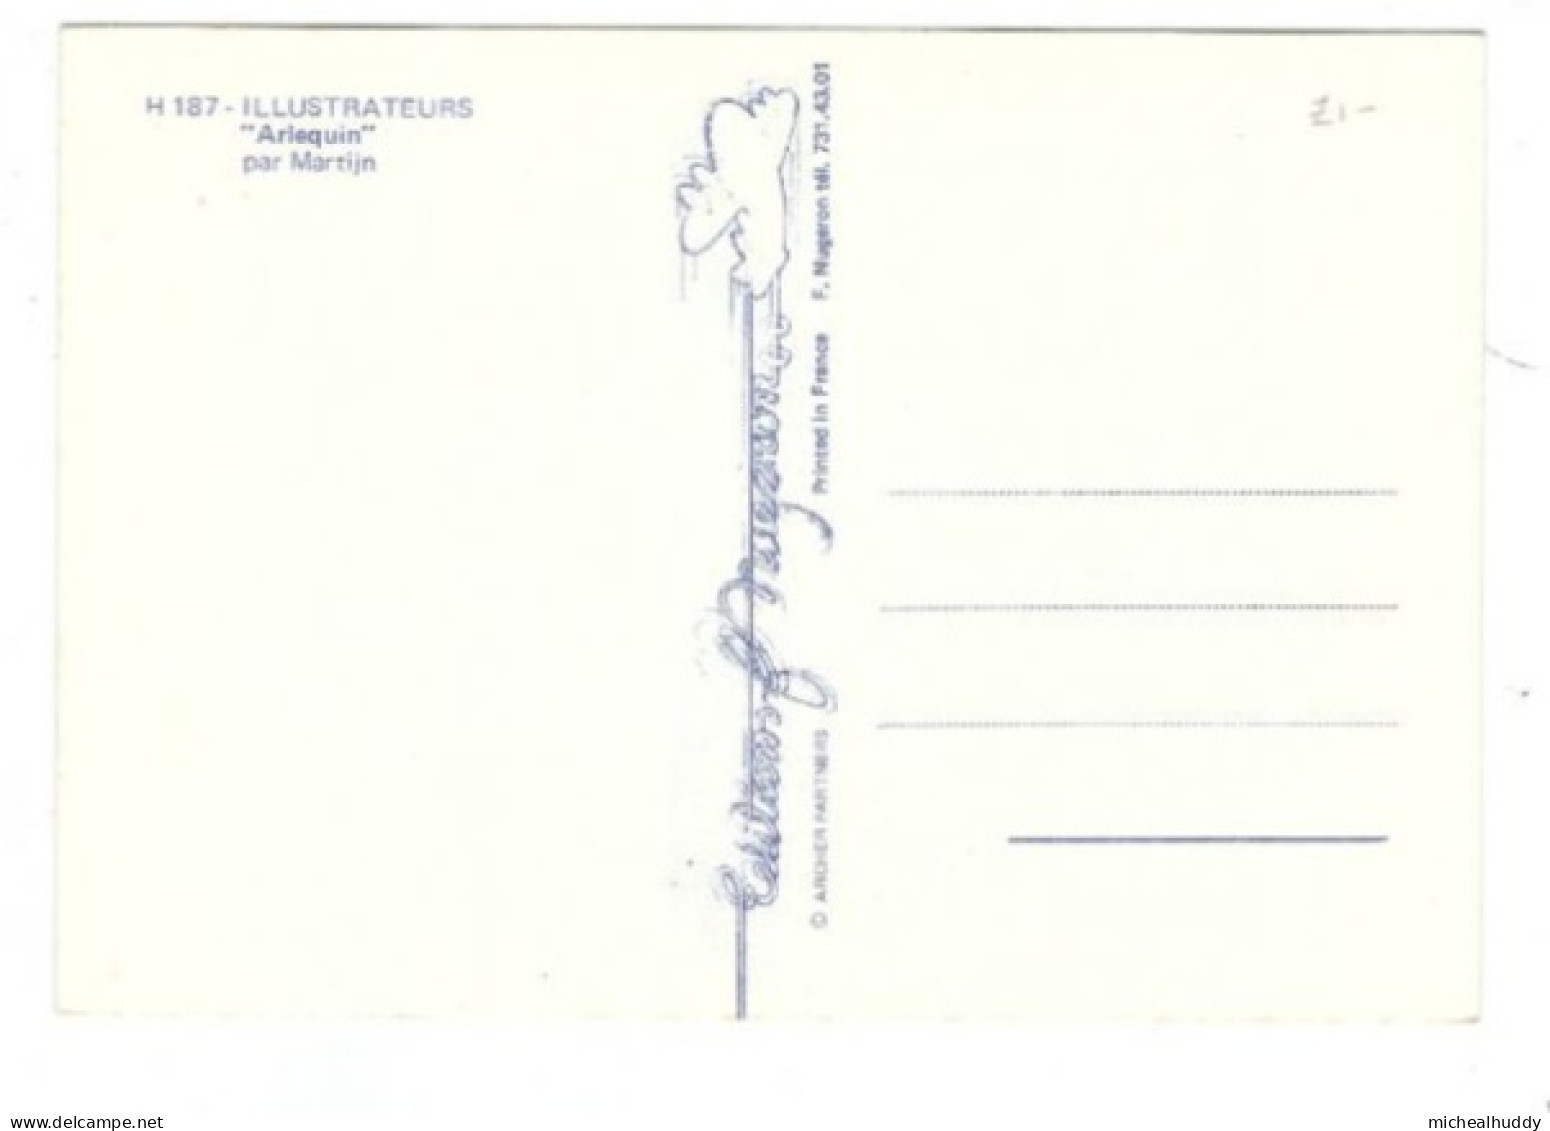 PUBL BY EDITIONS NUGERON  ILLUSTRATEURS SERIES ARLEQUIN BY MARTIJN  CARD NO H  187 - Zeitgenössisch (ab 1950)